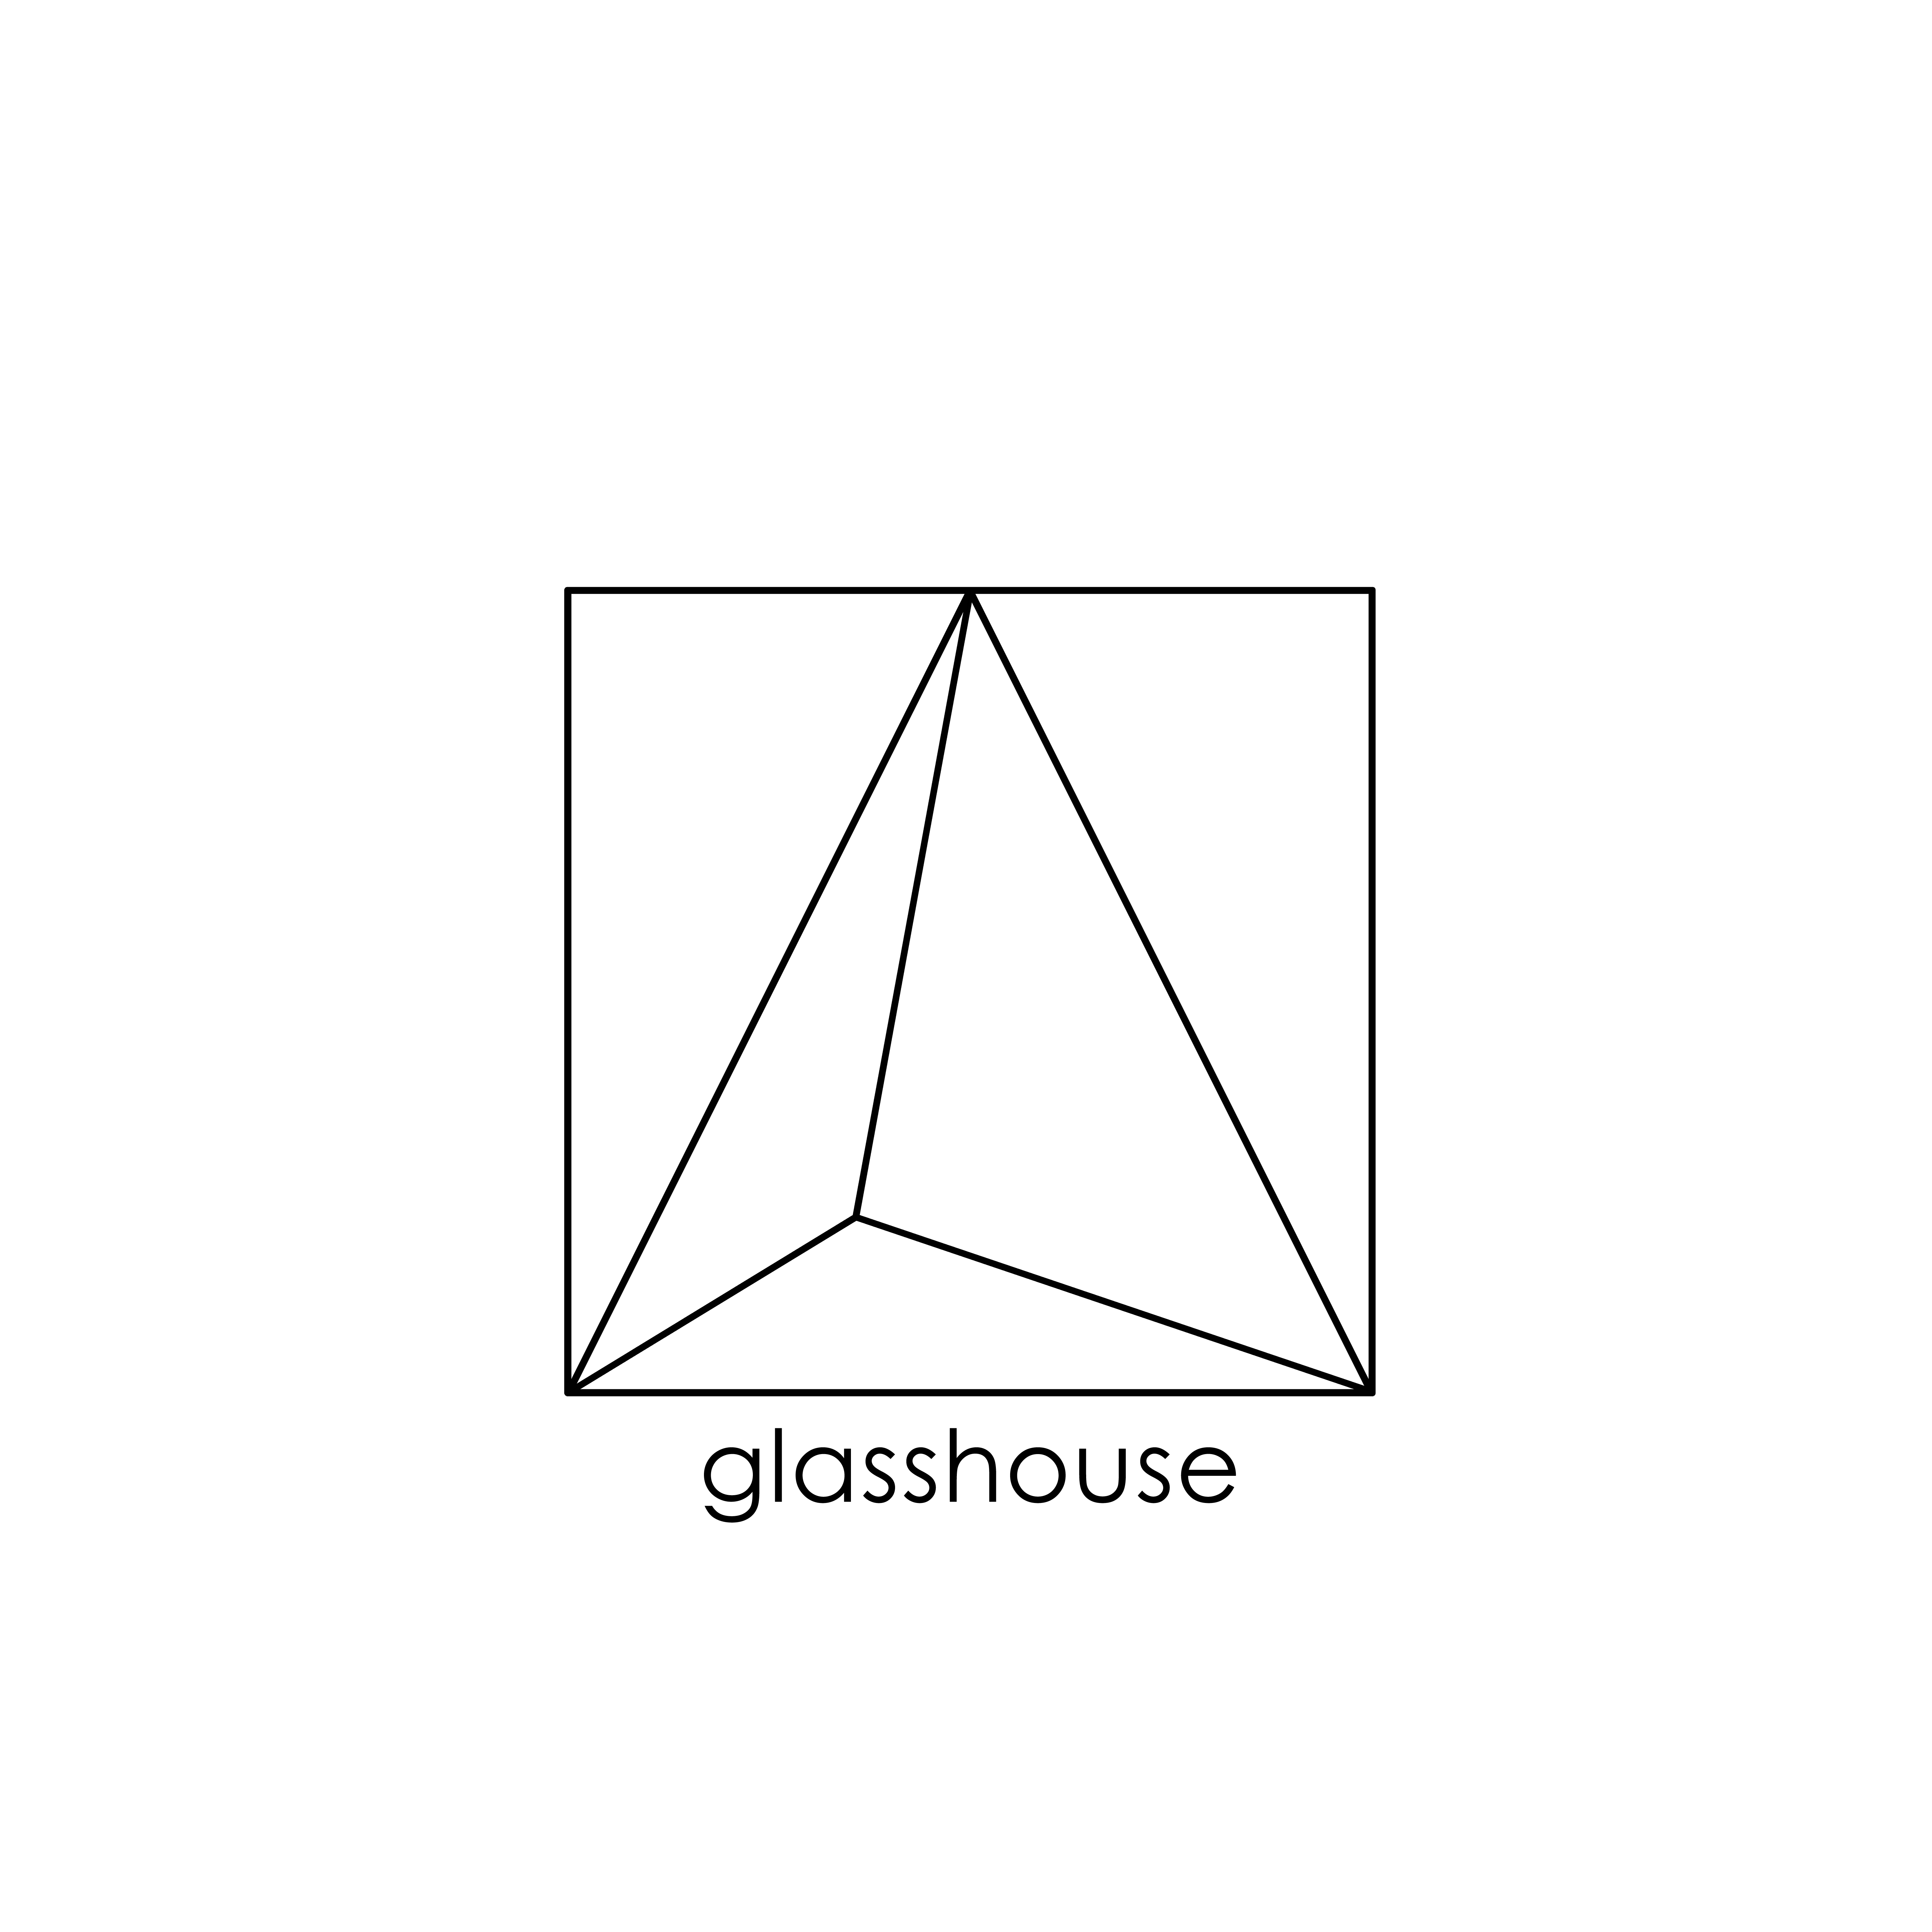 0.glasshouse-records